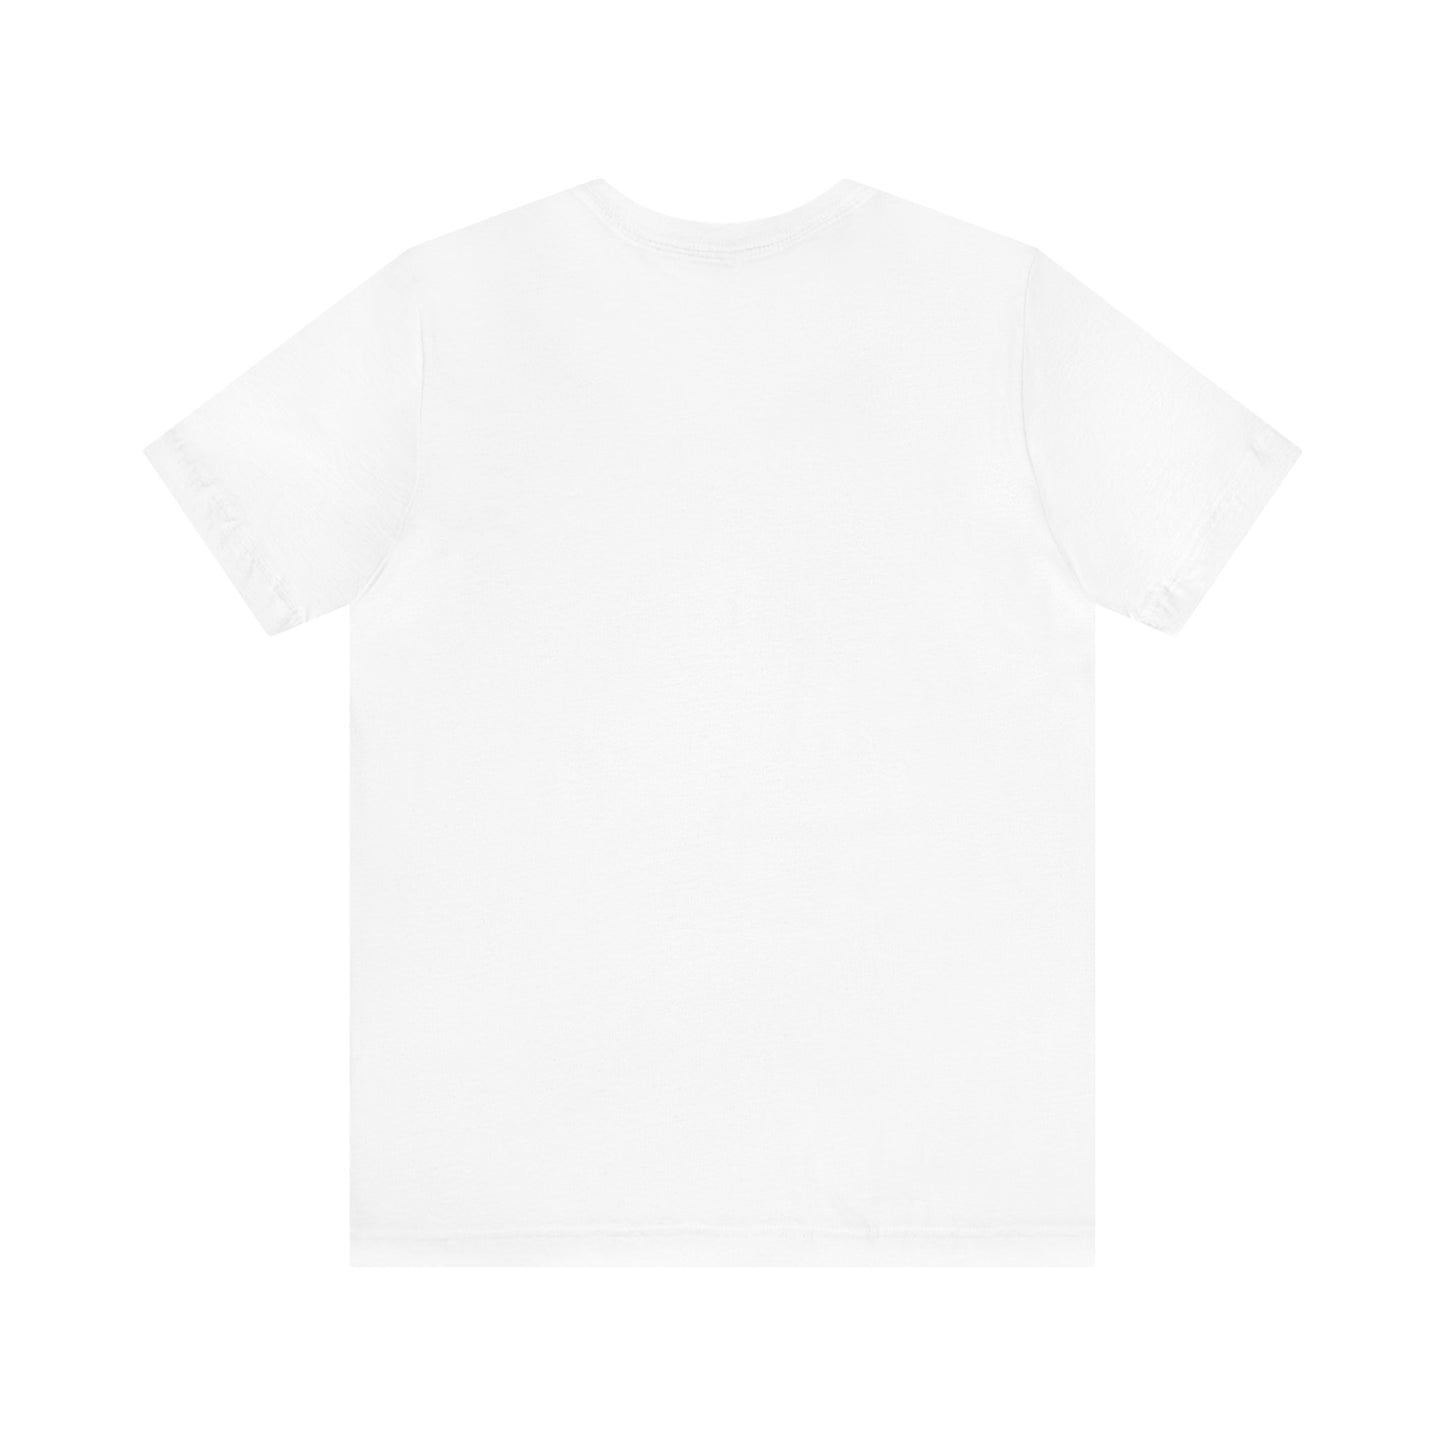 Skyaure ASD T-Shirt